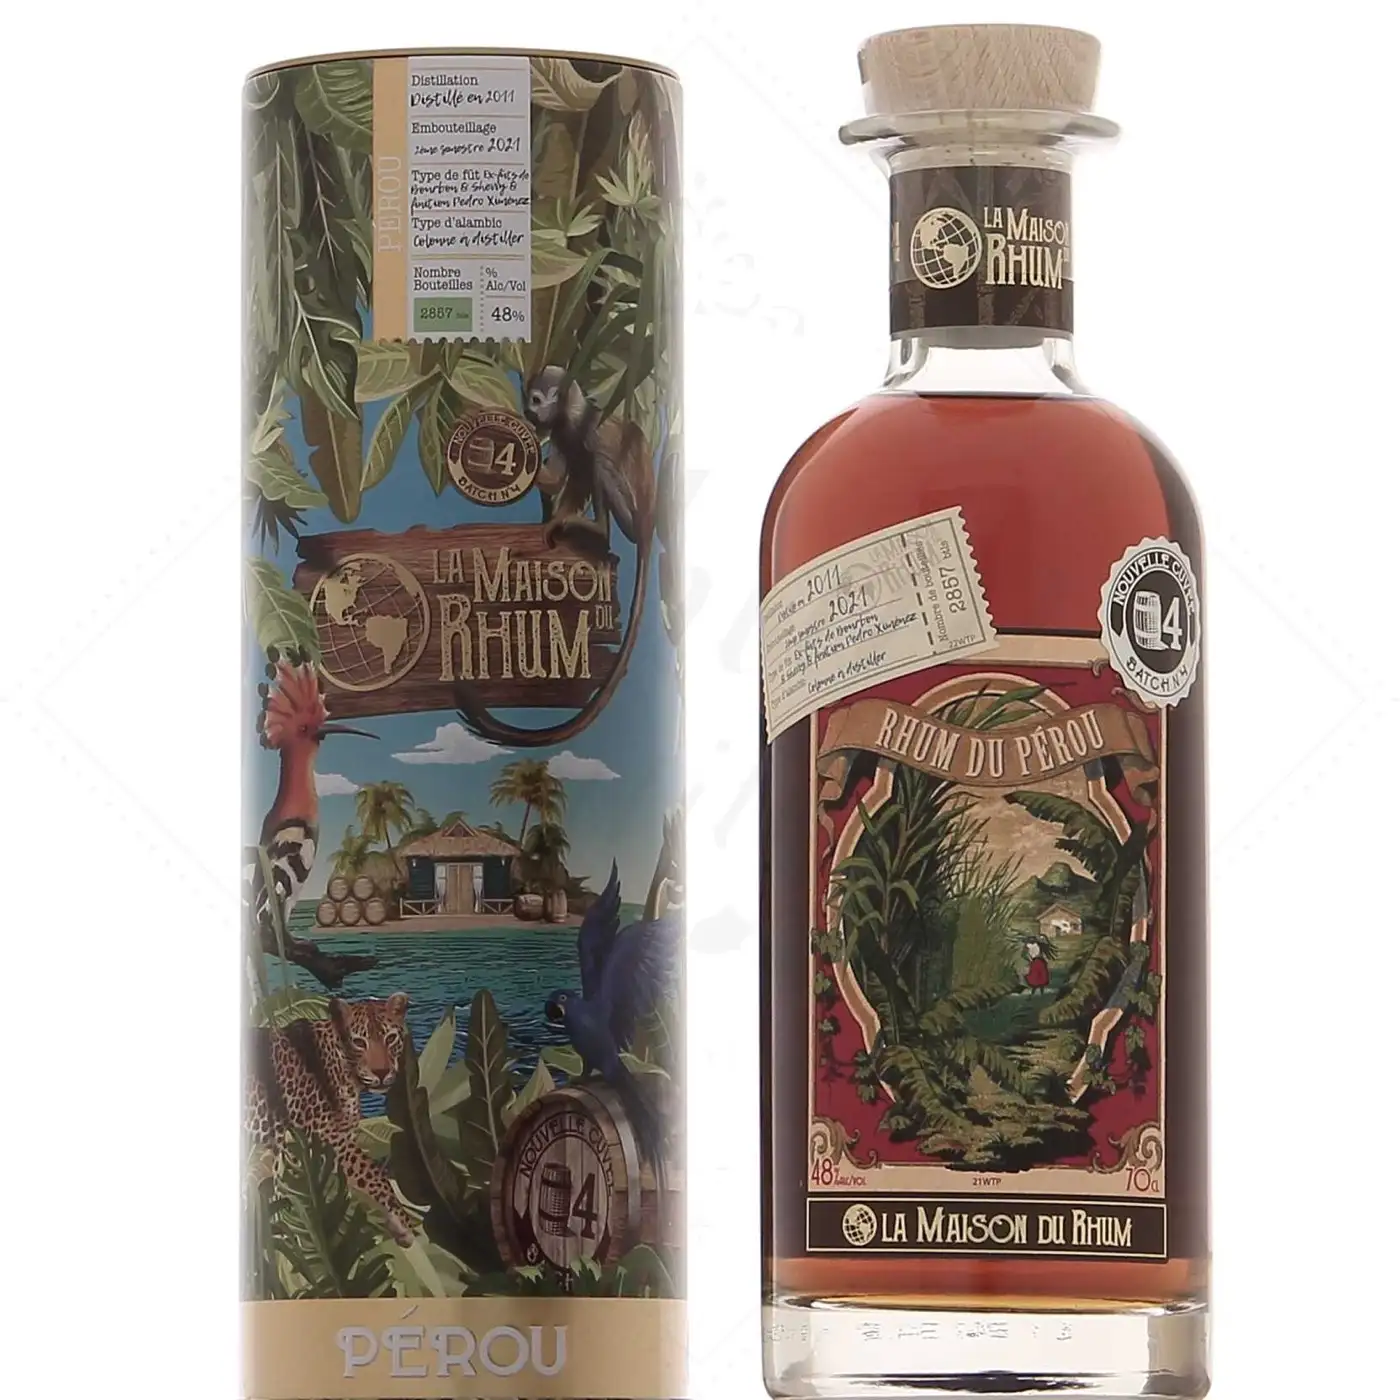 Image of the front of the bottle of the rum La Maison du Rhum Millonario #4